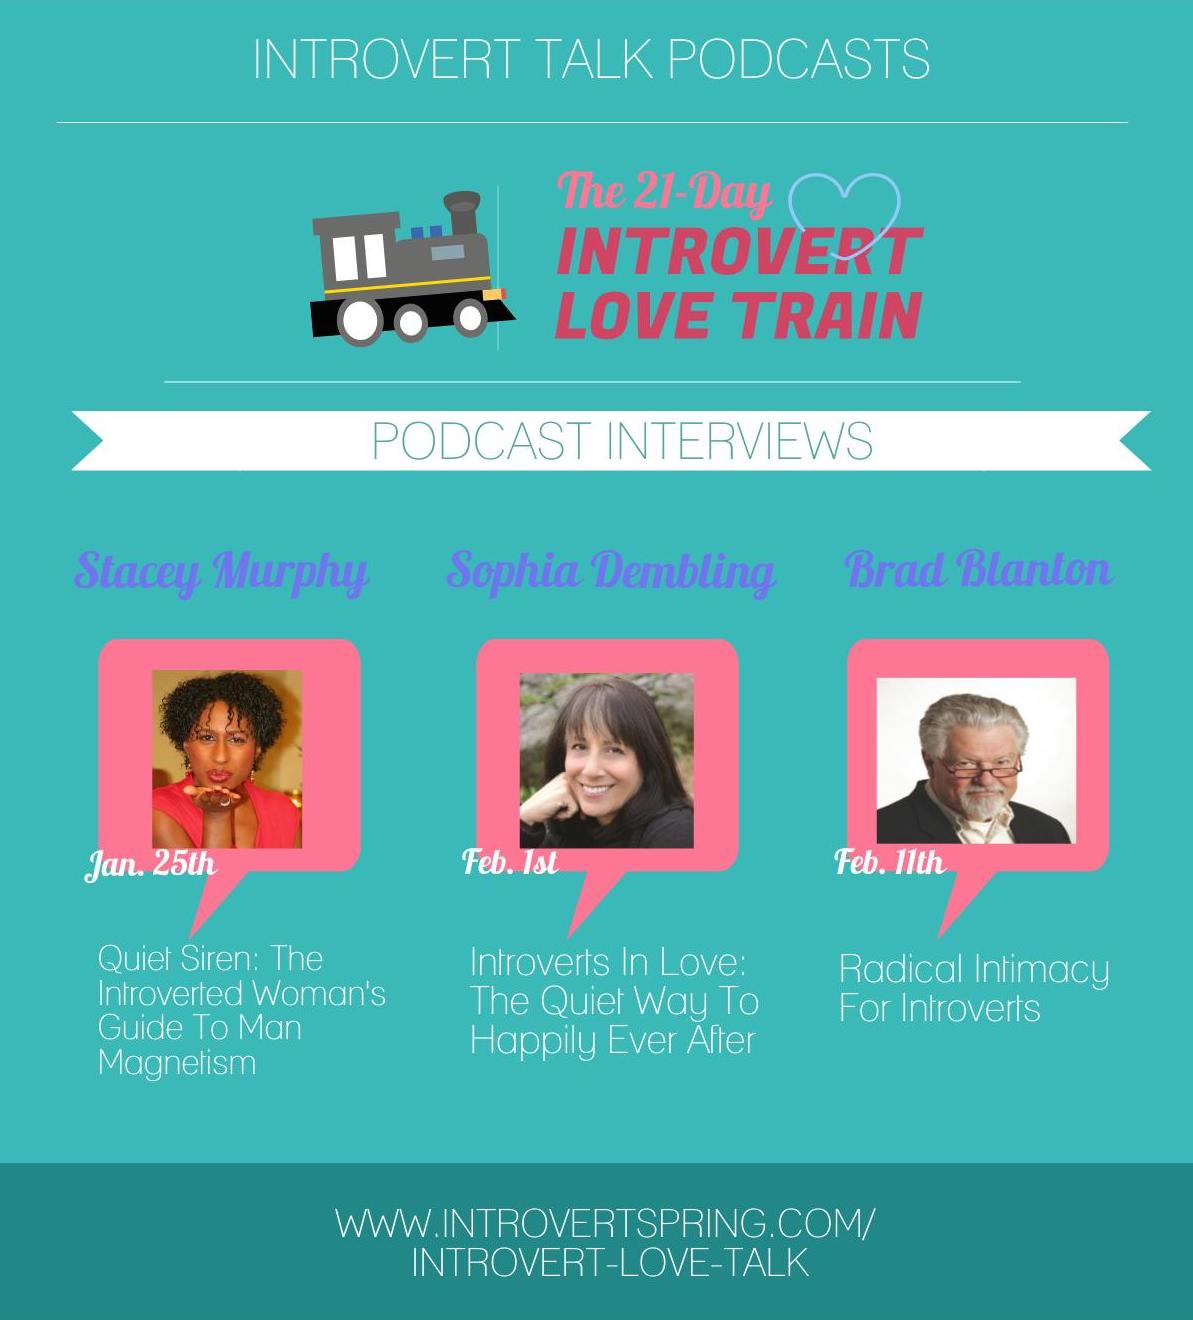 Introvert Talk: Love Train Podcasts